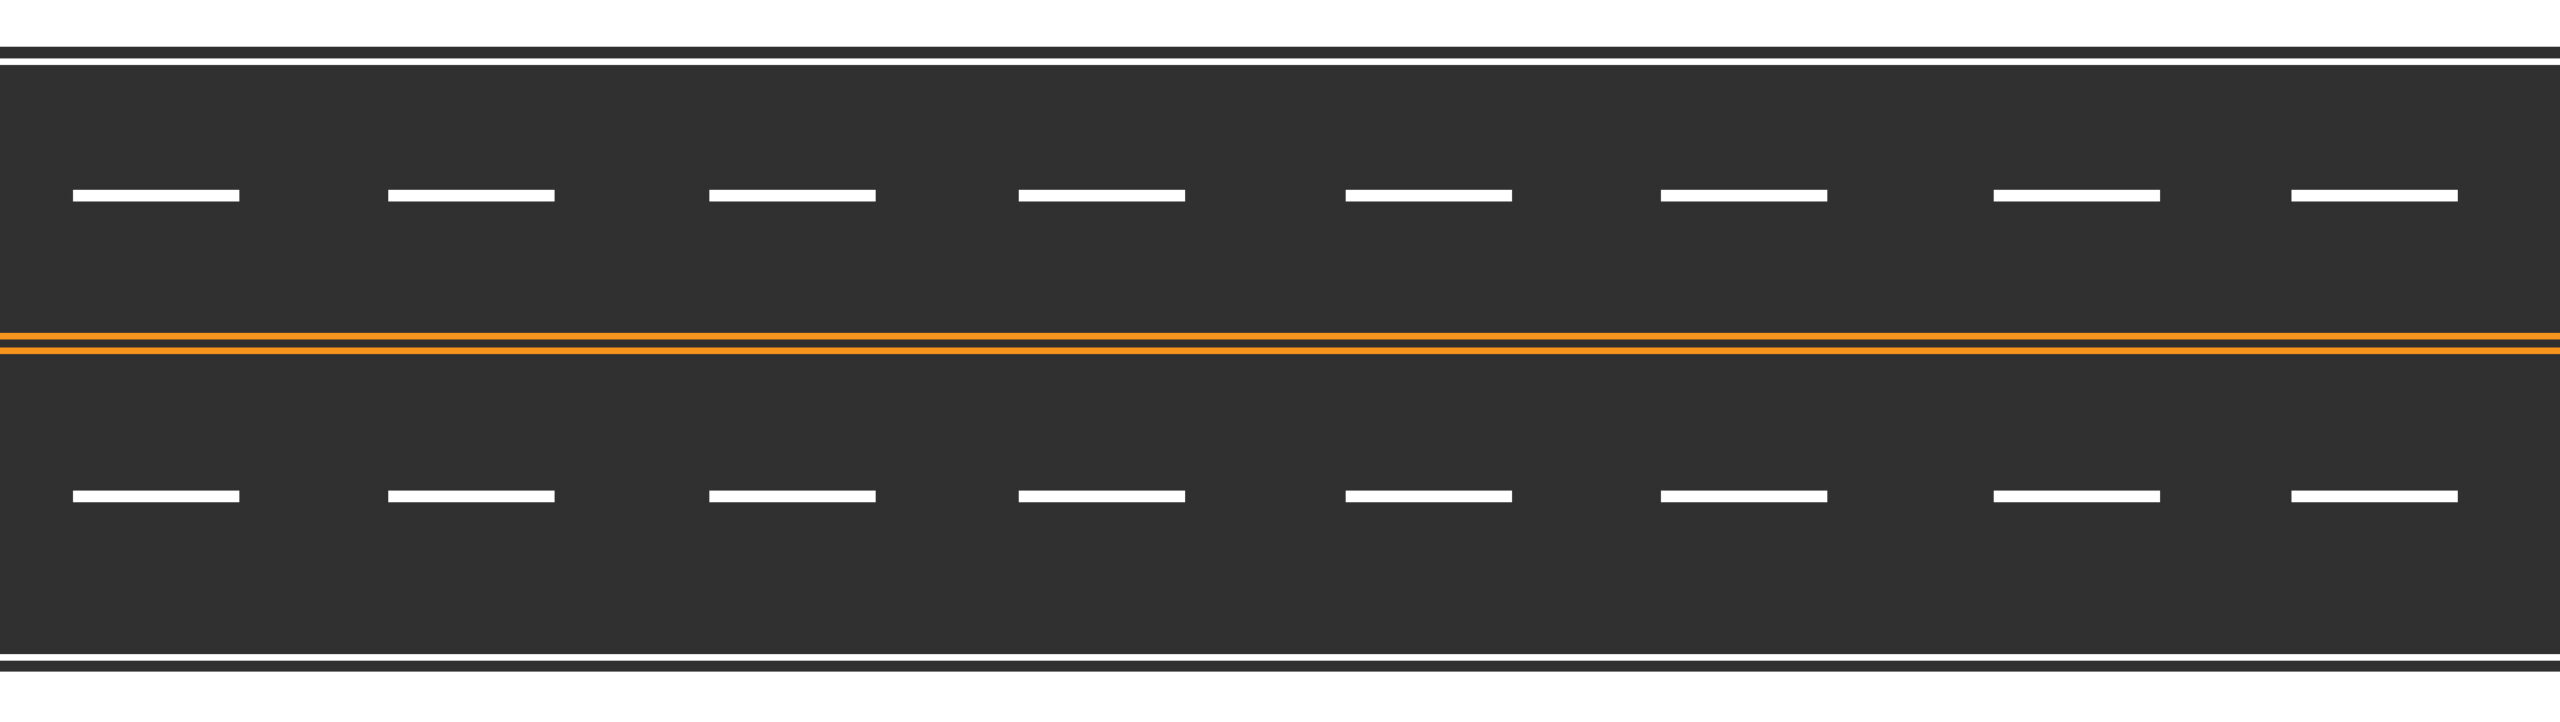 highway marking clipart